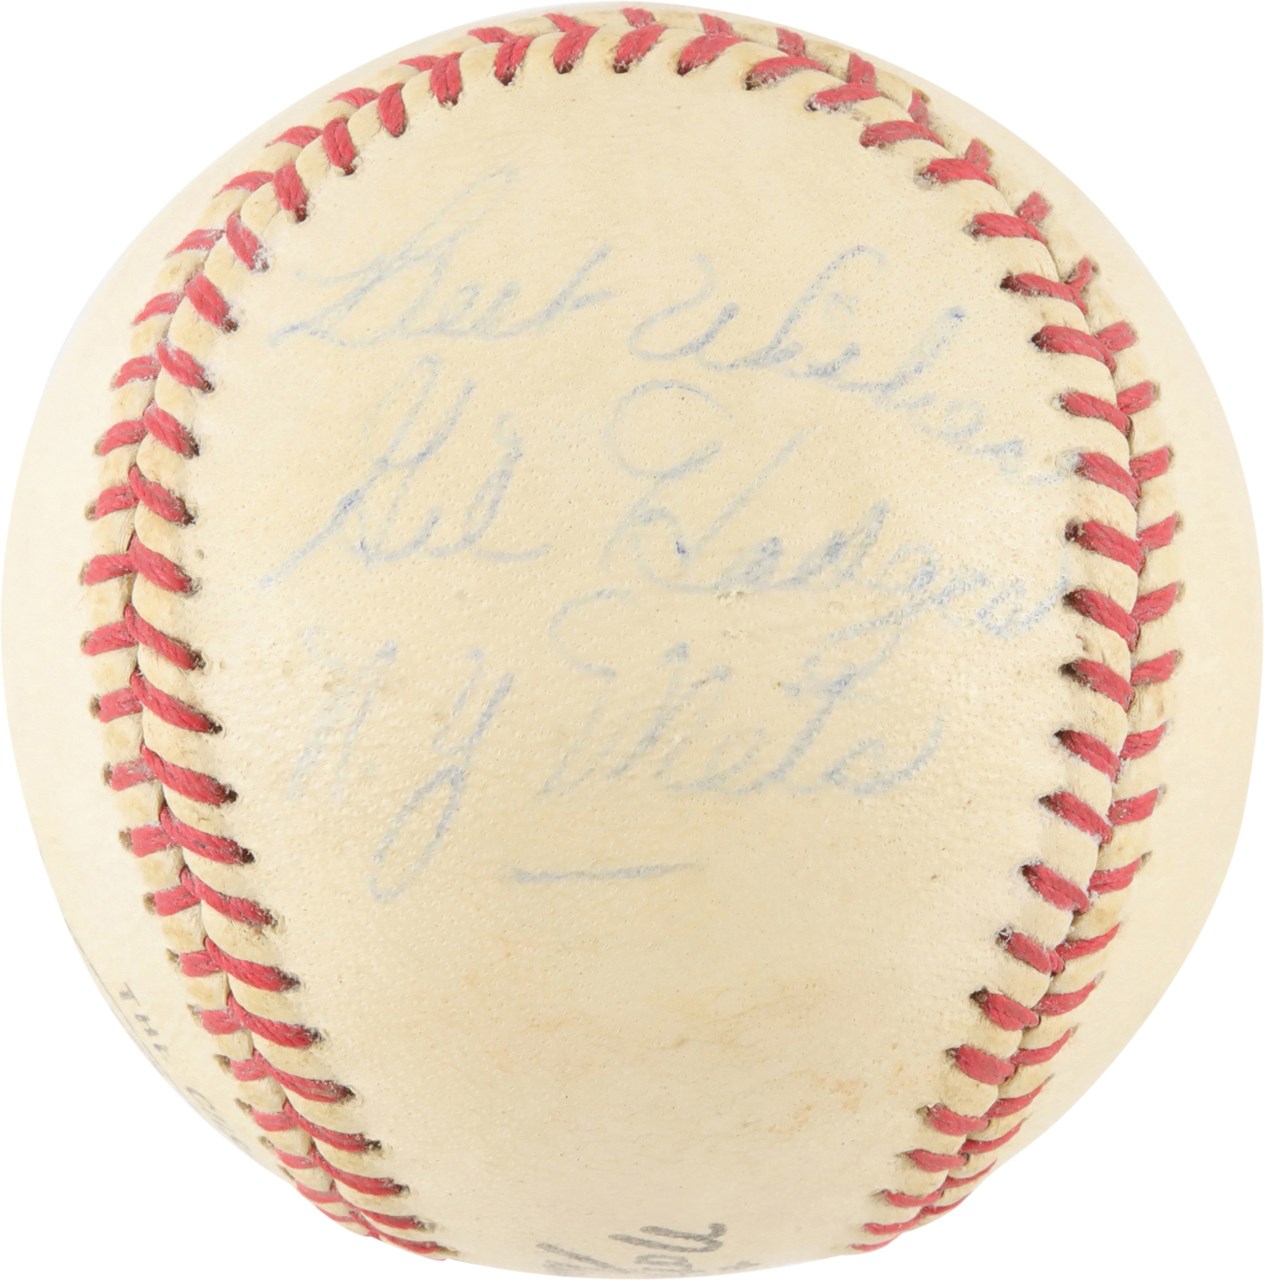 - 1960s Gil Hodges "NY Mets" Single Signed Baseball (JSA)